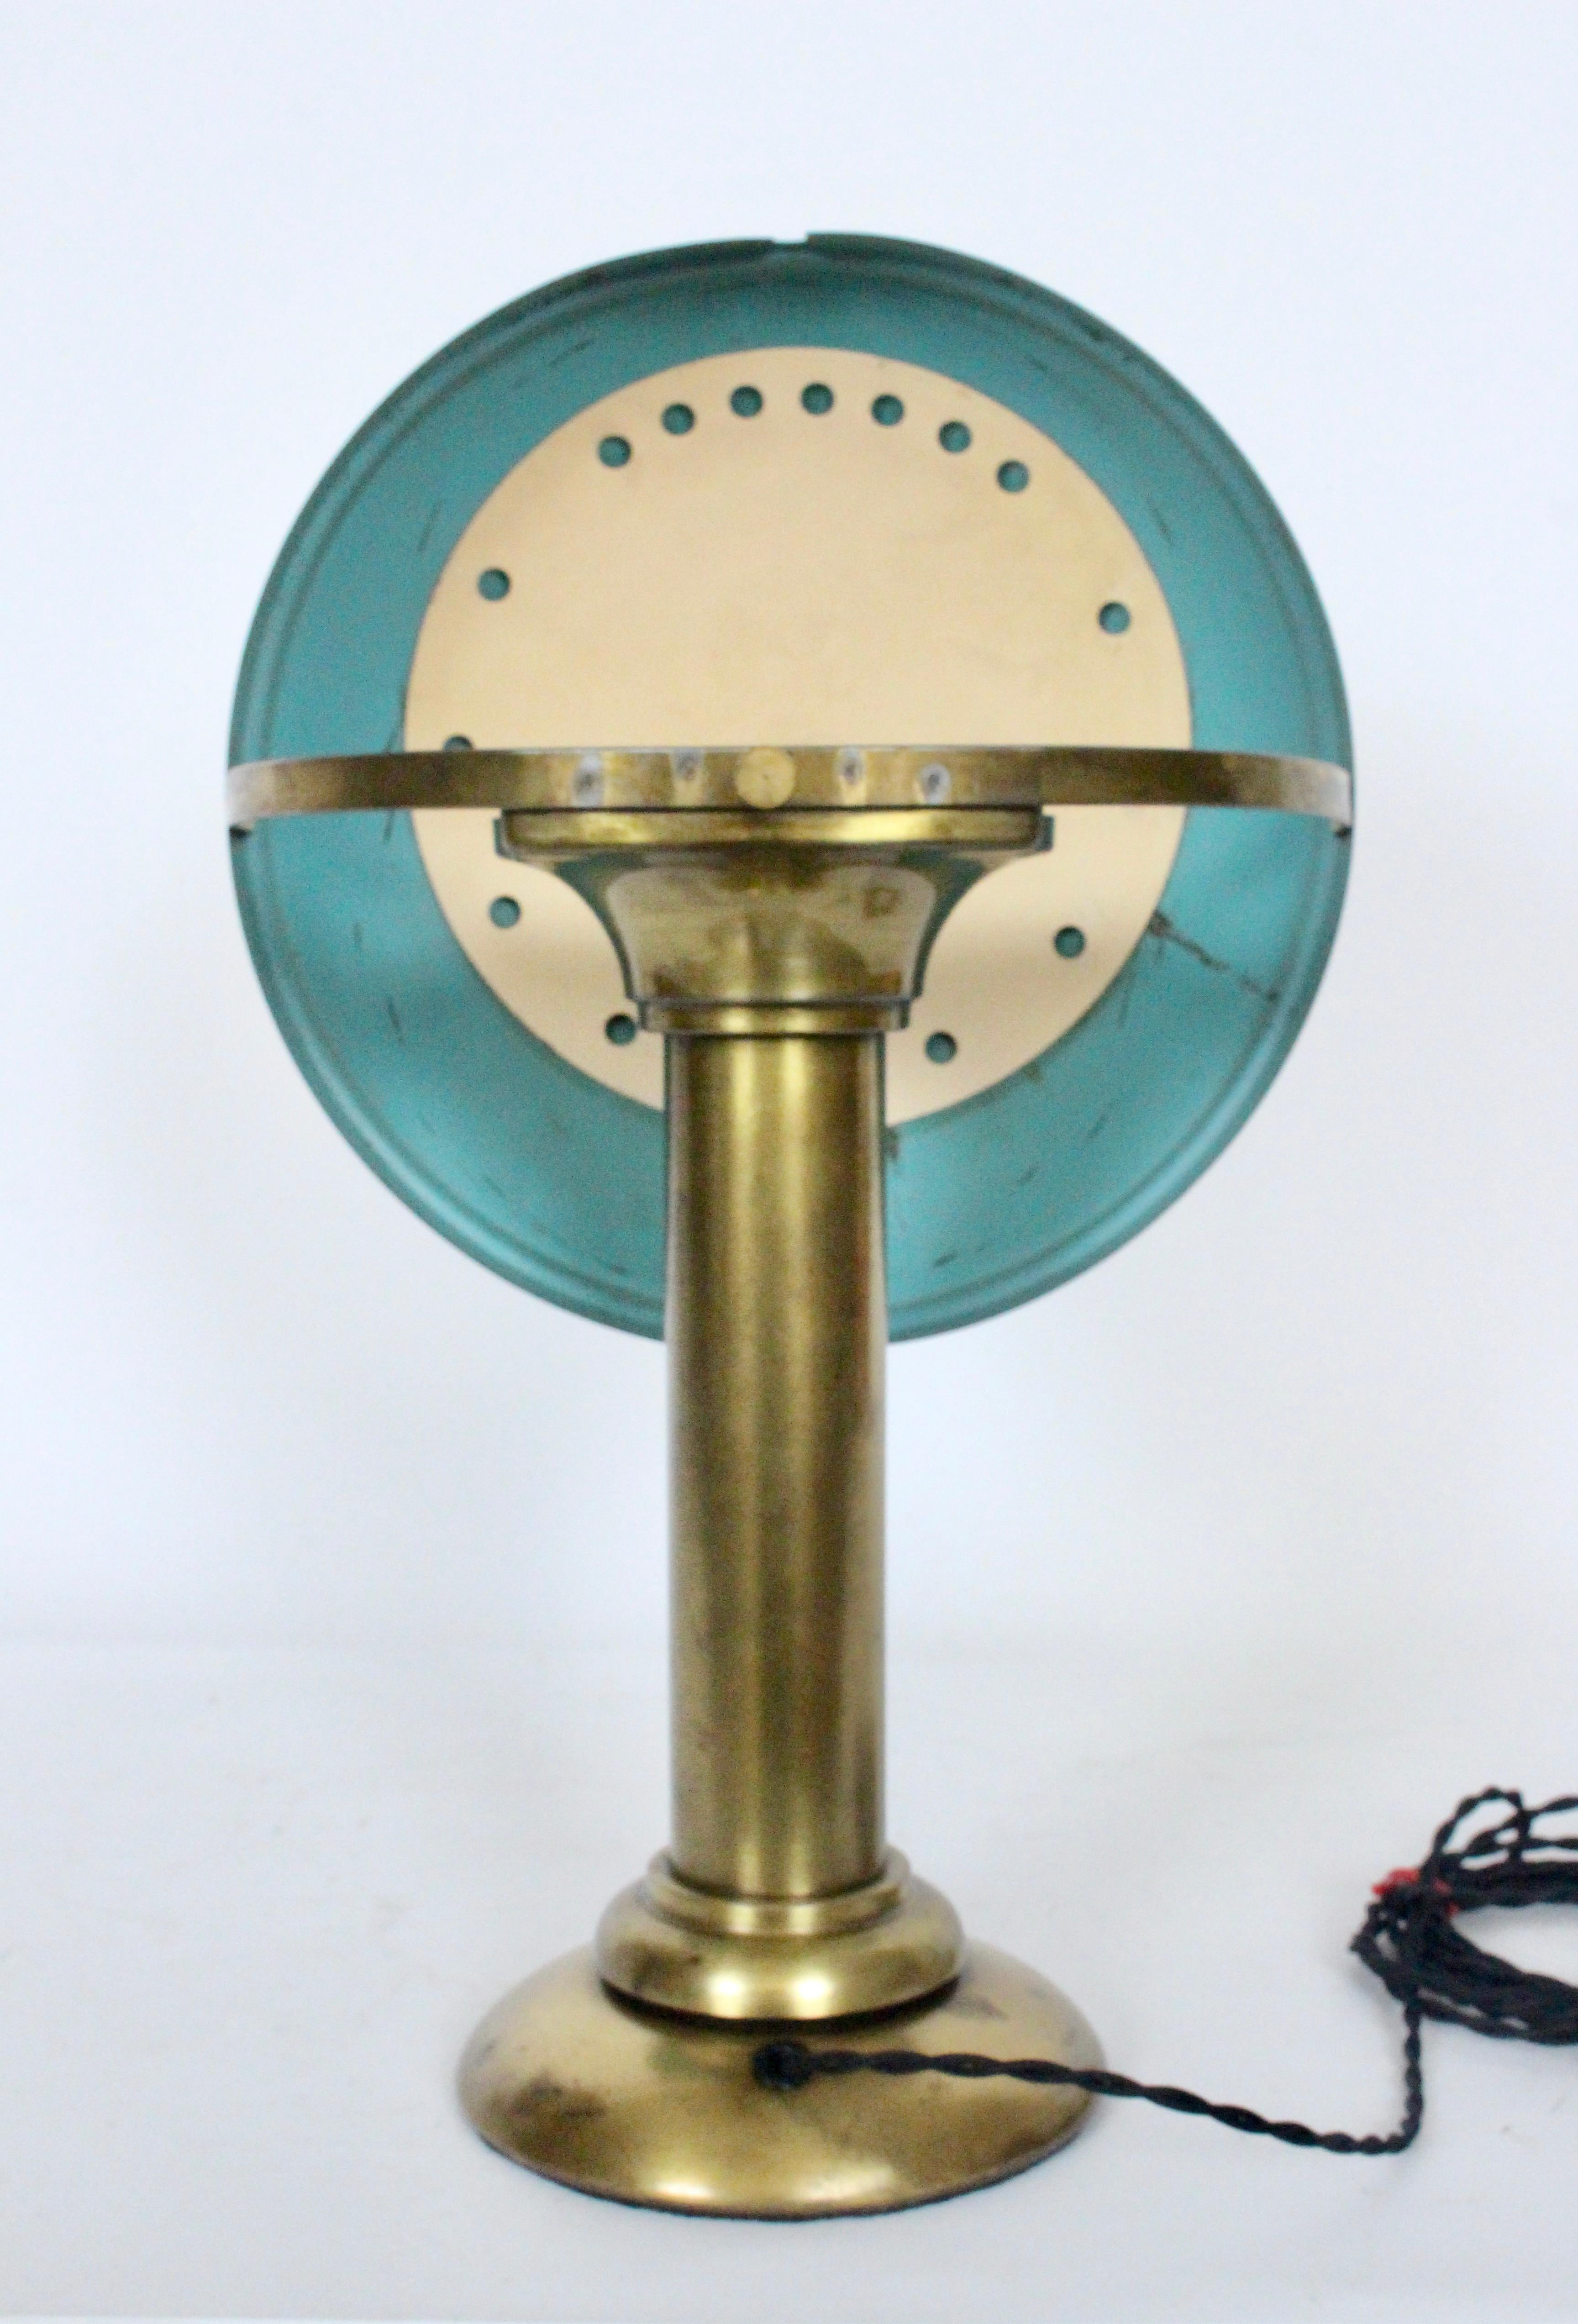 Fairies Mfg. Co. Brass Cantilever Desk Lamp, 1920s For Sale 6